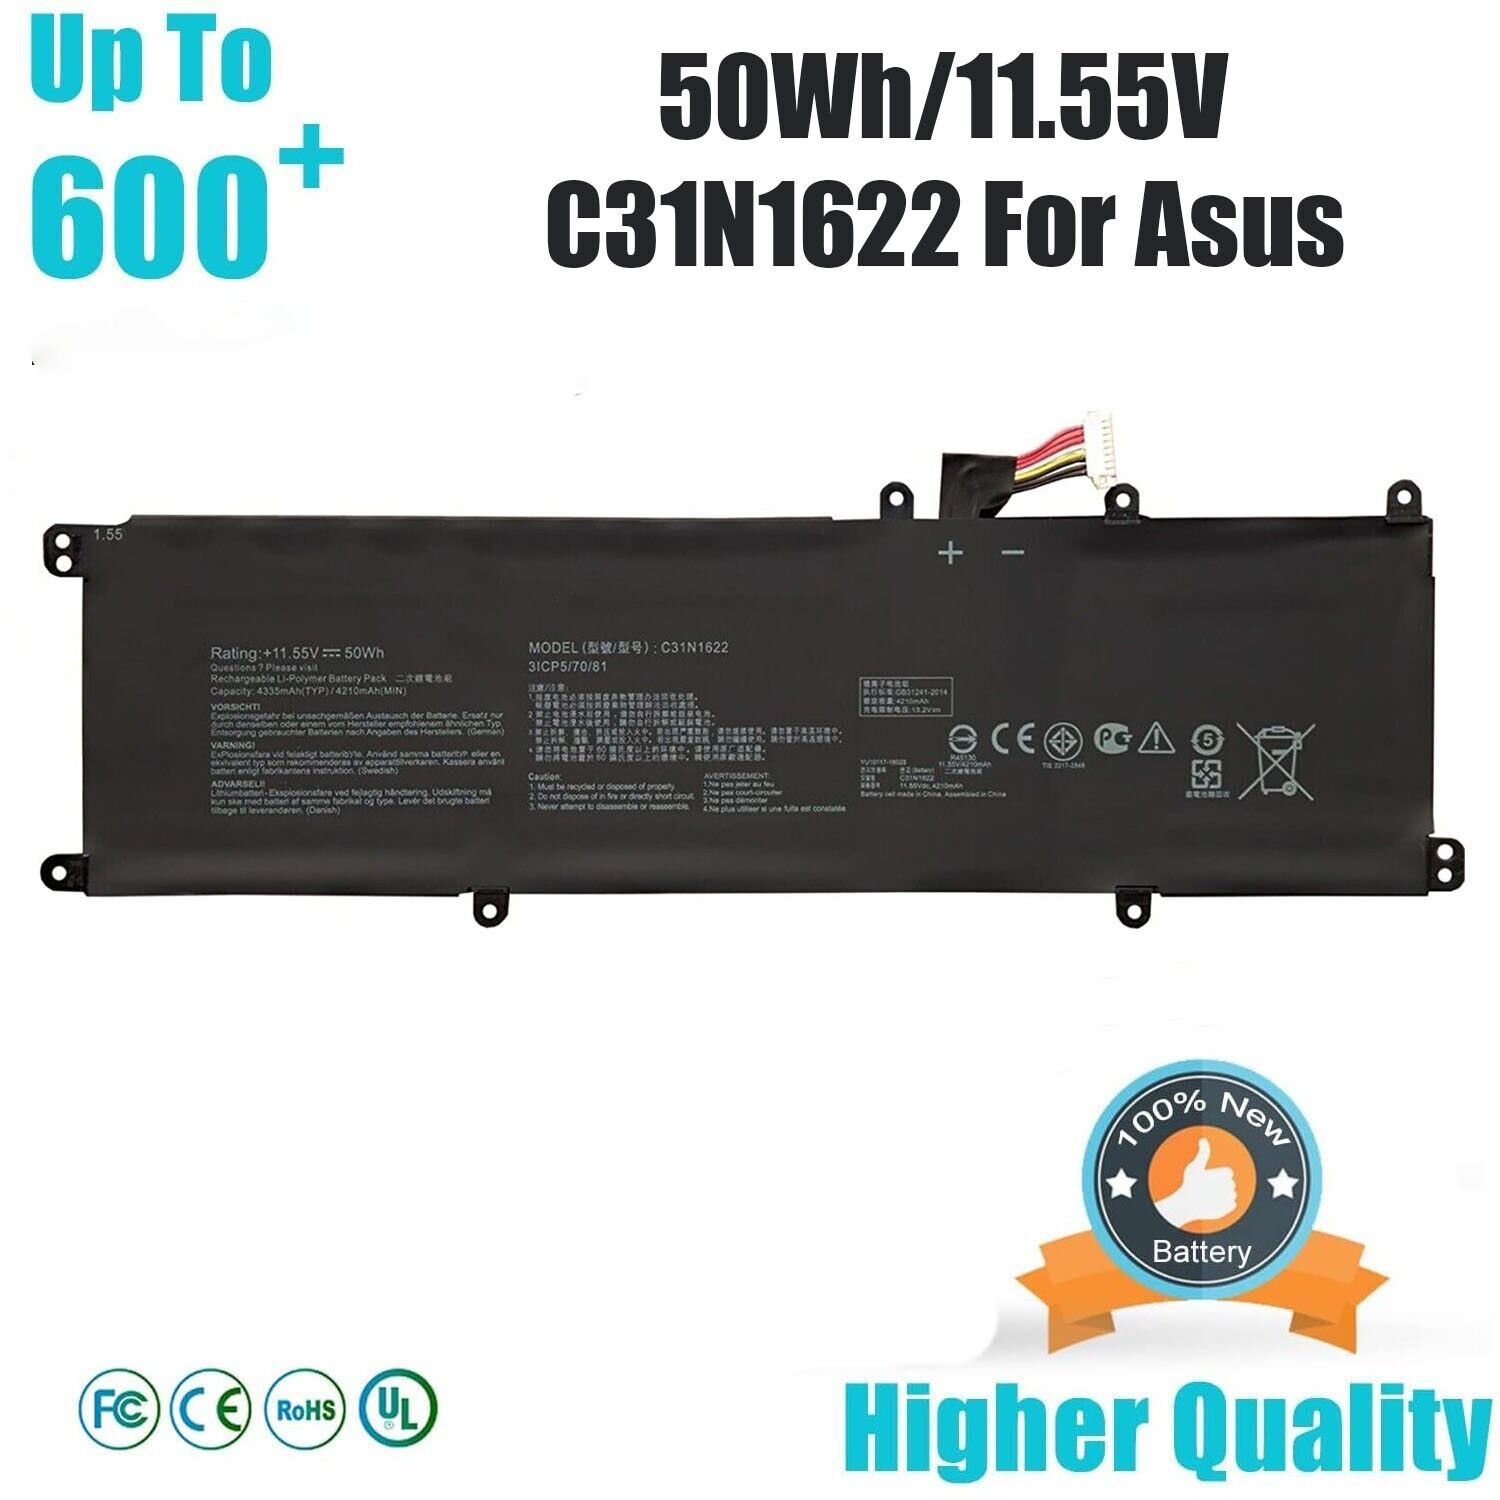 50Wh C31N1622 Battery For Asus ZenBook UX3430UA UX530U U5100U UX530UQ UX530UX